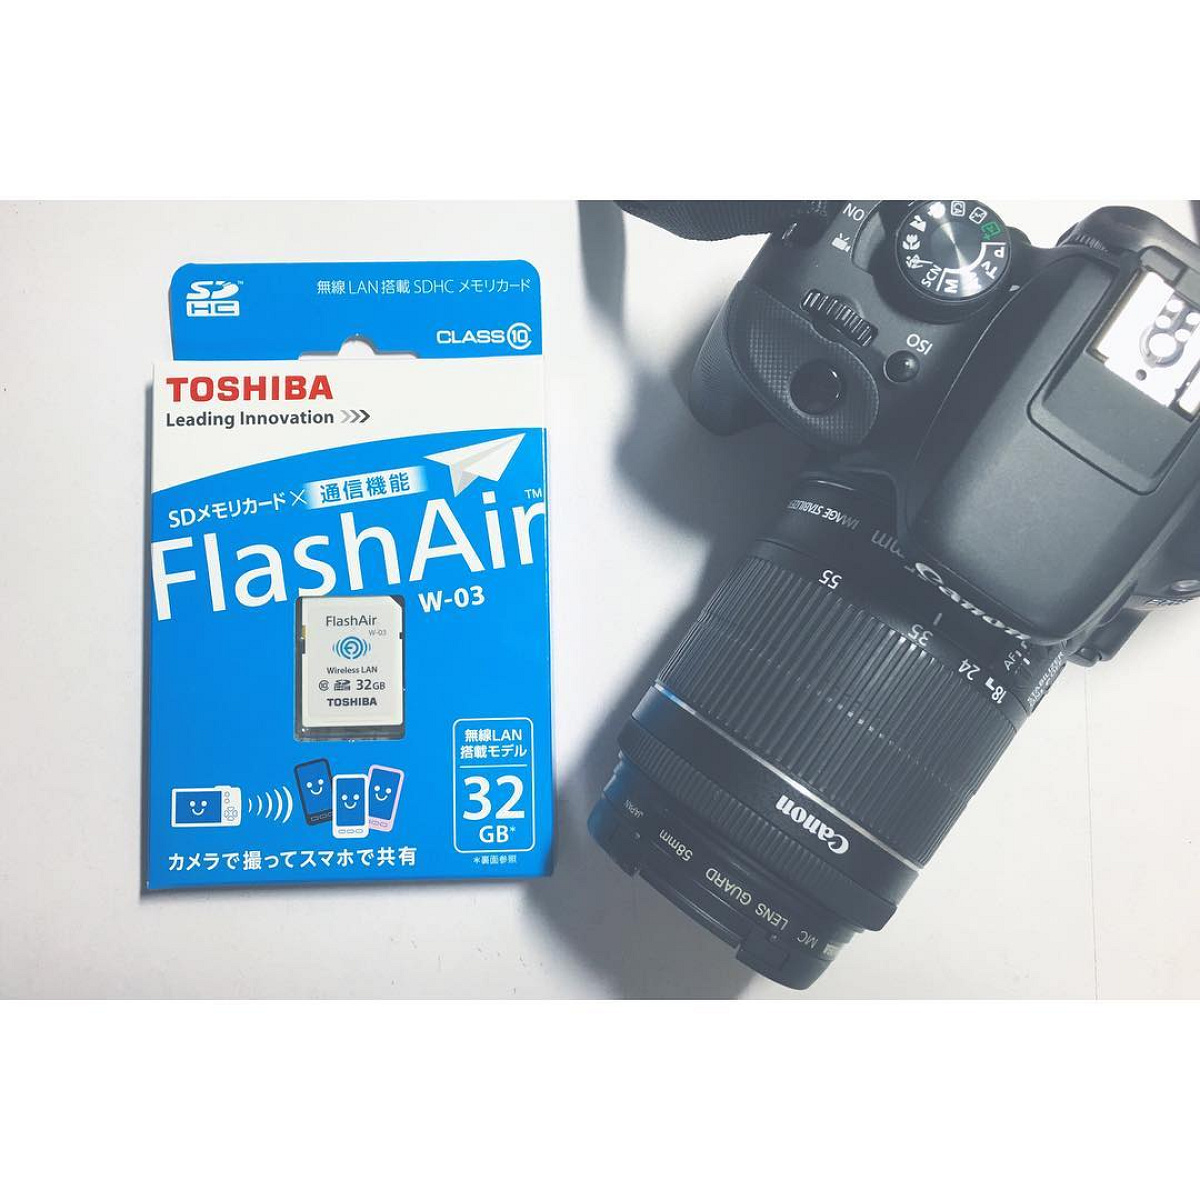 TOSHIBA FlashAir（Wi-Fi搭載SDカード）